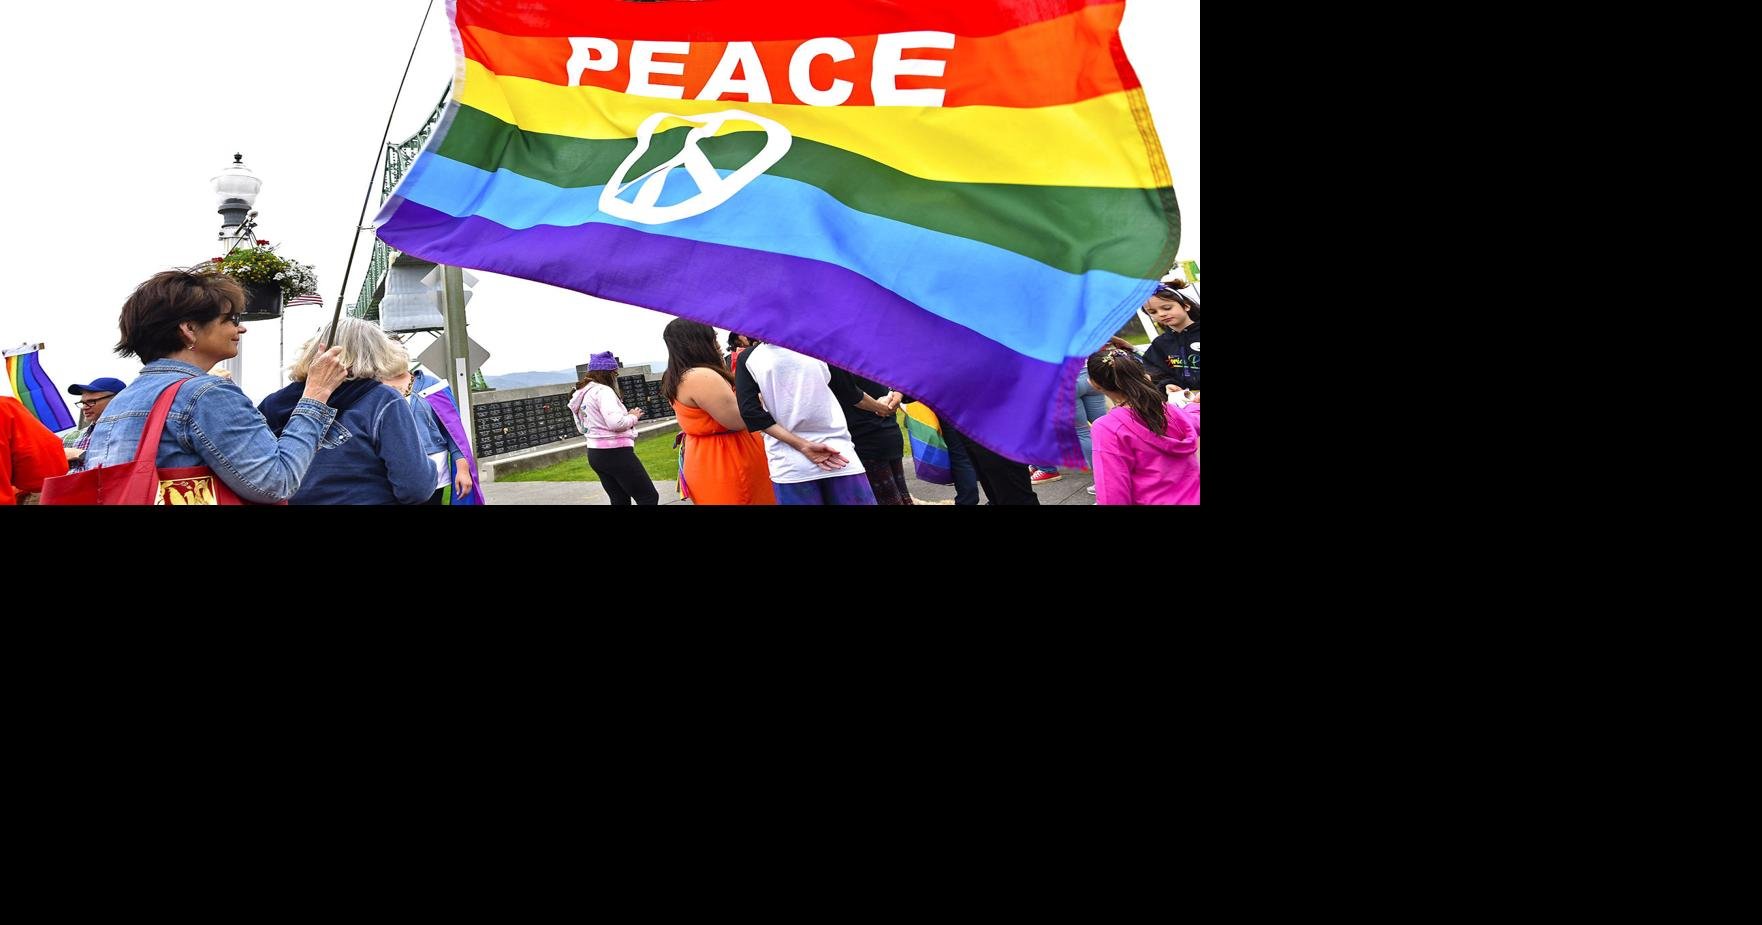 The rainbow connection Astoria Pride celebrates LGBTQ community